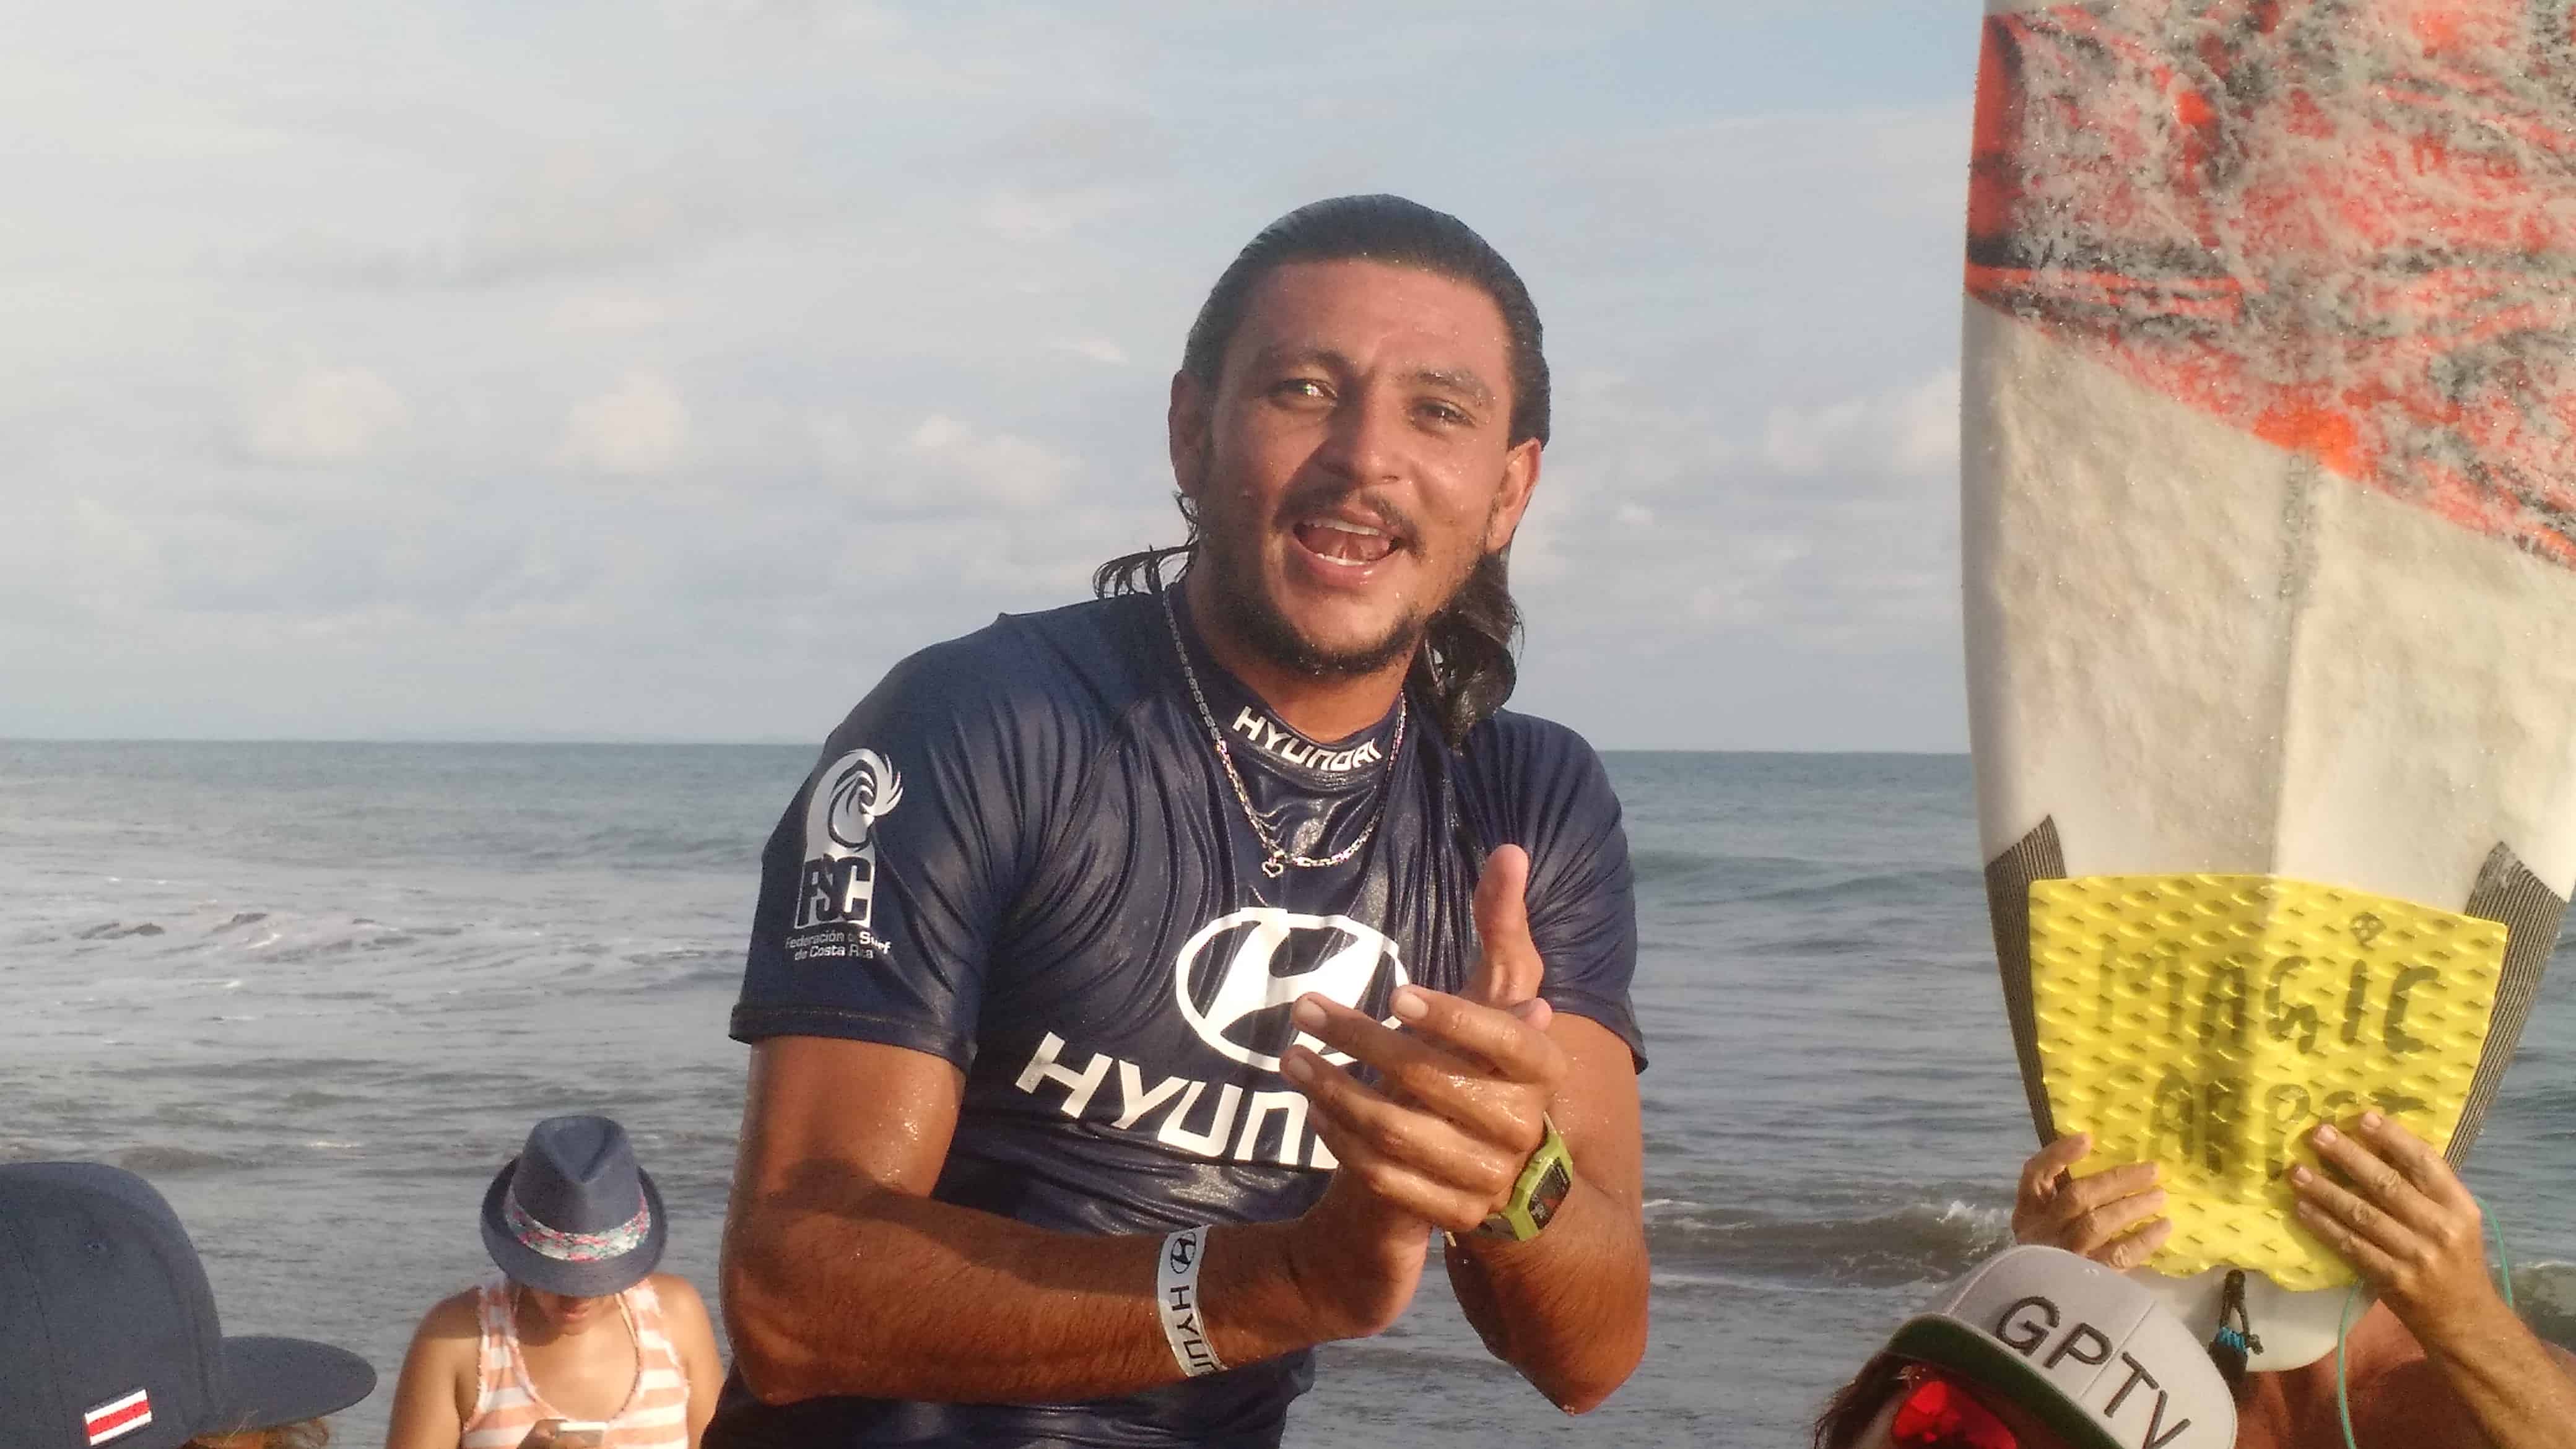 Costa Rica surf i20